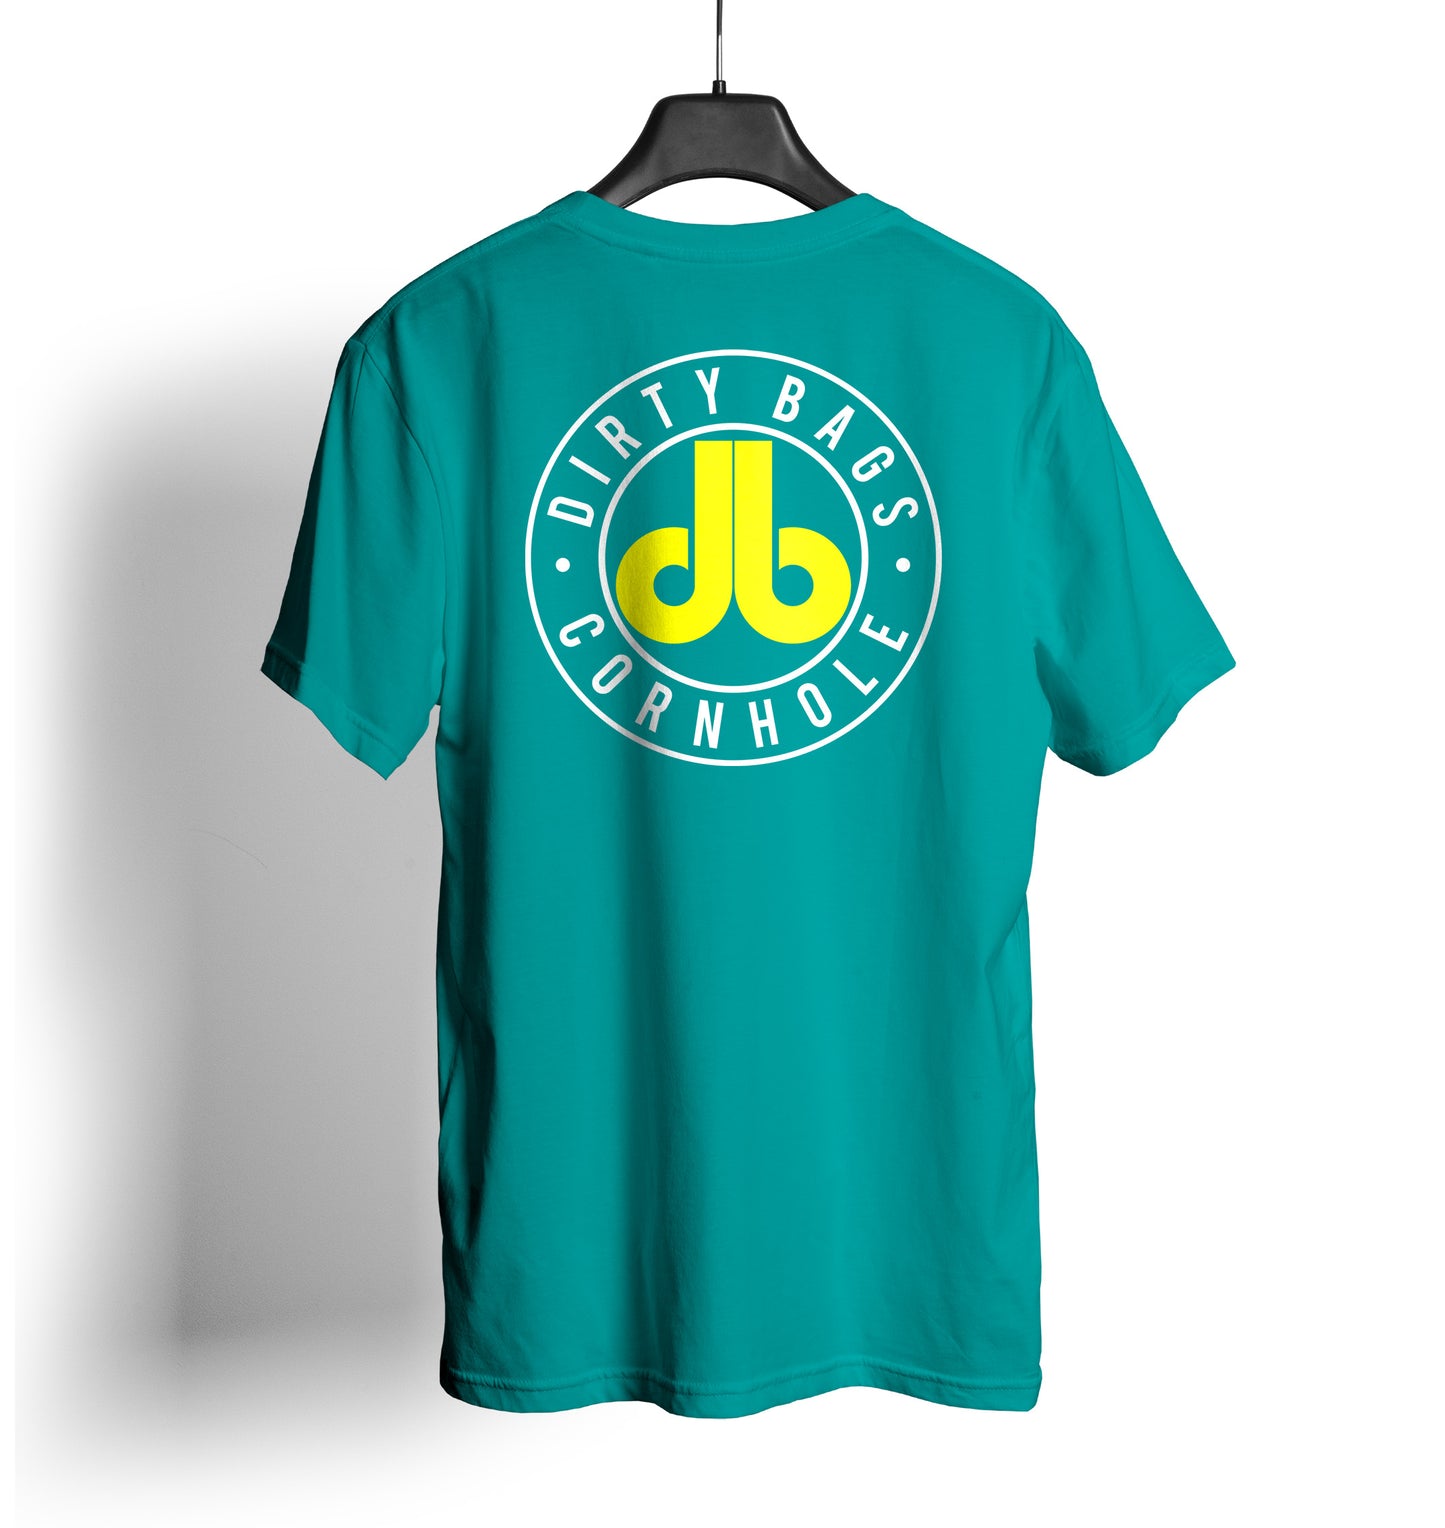 db Cornhole T Shirt - Turquoise and Yellow